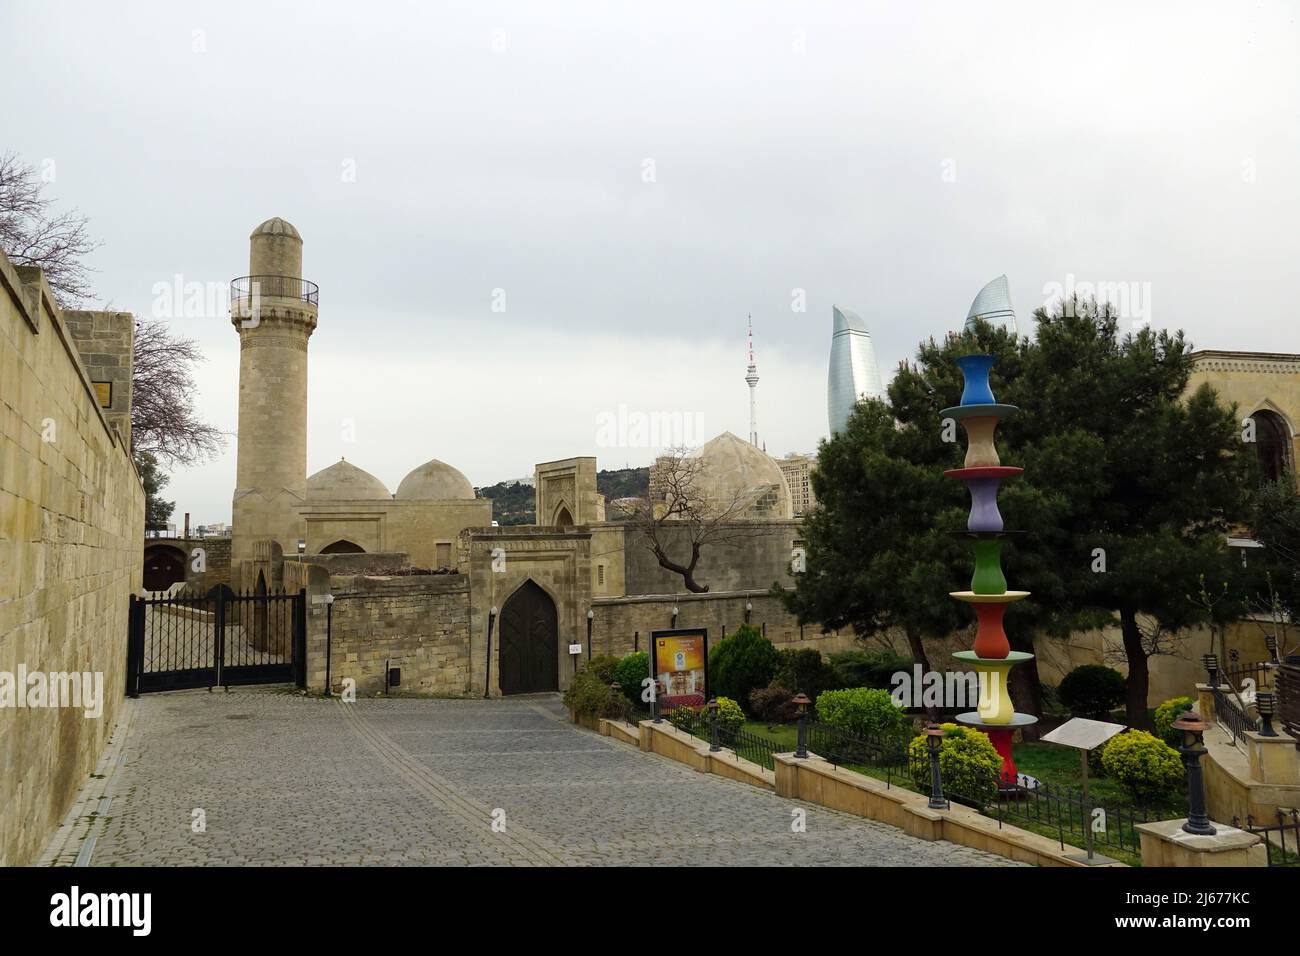 Palatial mosque, Saray məscidi, Palace of the Shirvanshahs, Icheri Sheher, Old City, Baku, İçərişəhər, Azerbaijan, UNESCO World Heritage Site Stock Photo